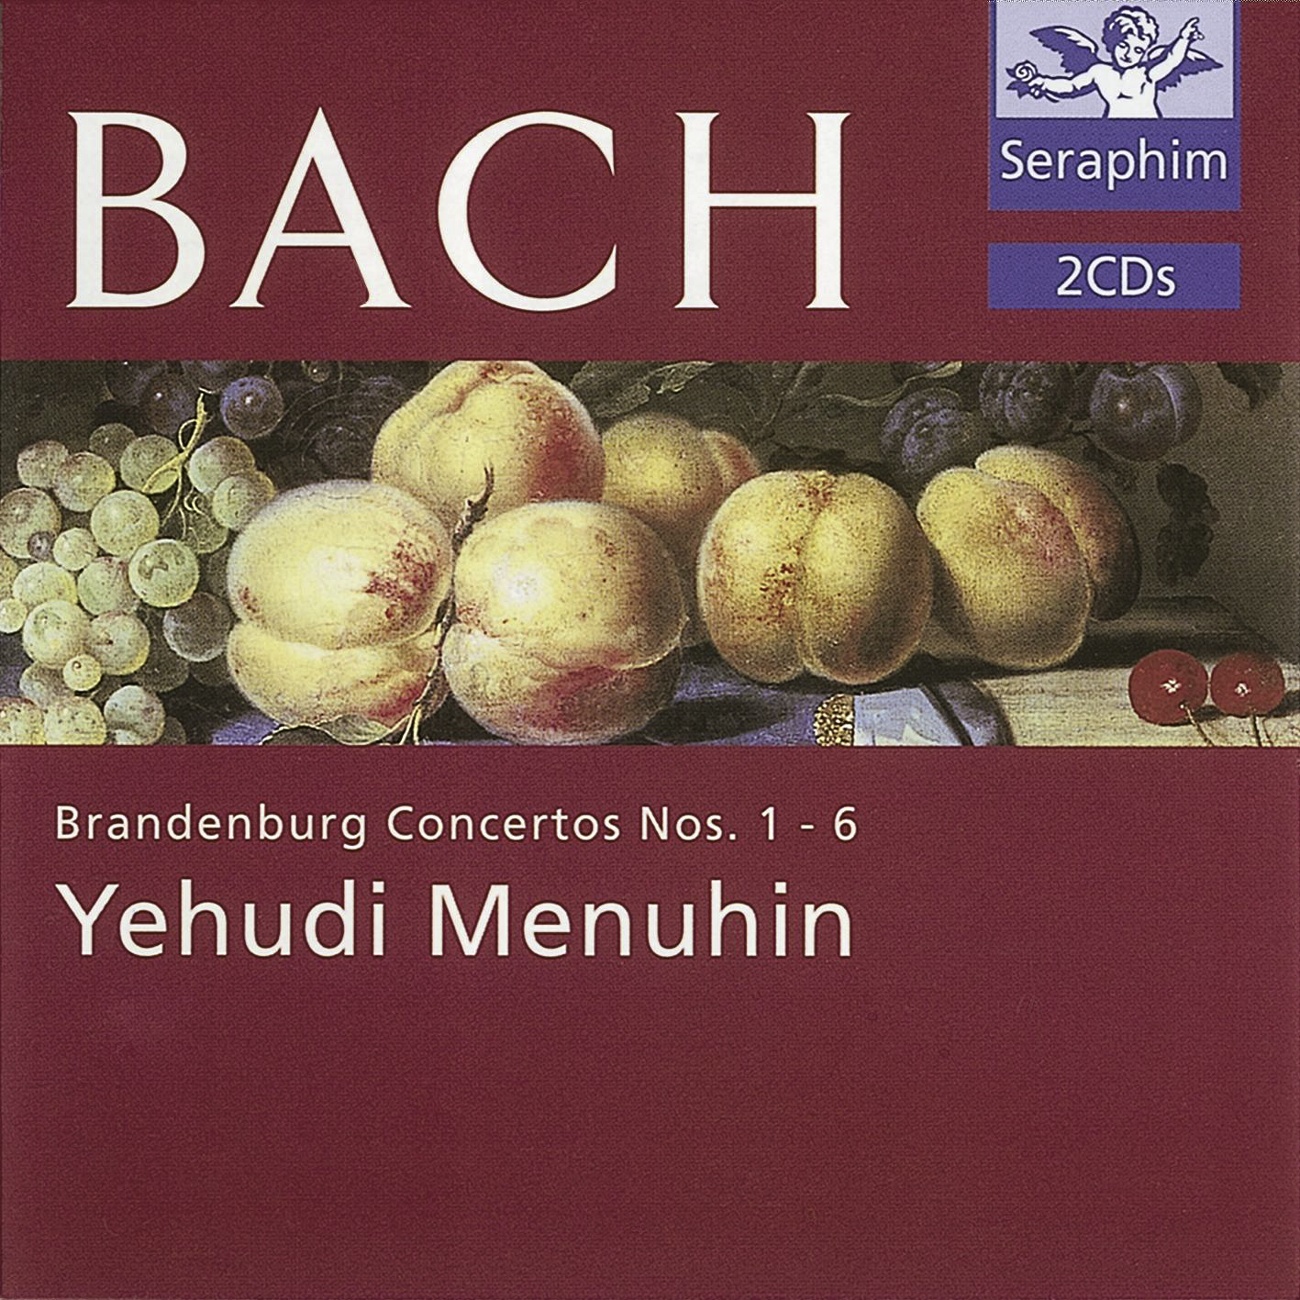 Brandenburg Concerto No. 3 in G BWV1048 (1989 Digital Remaster): I.    [Allegro]